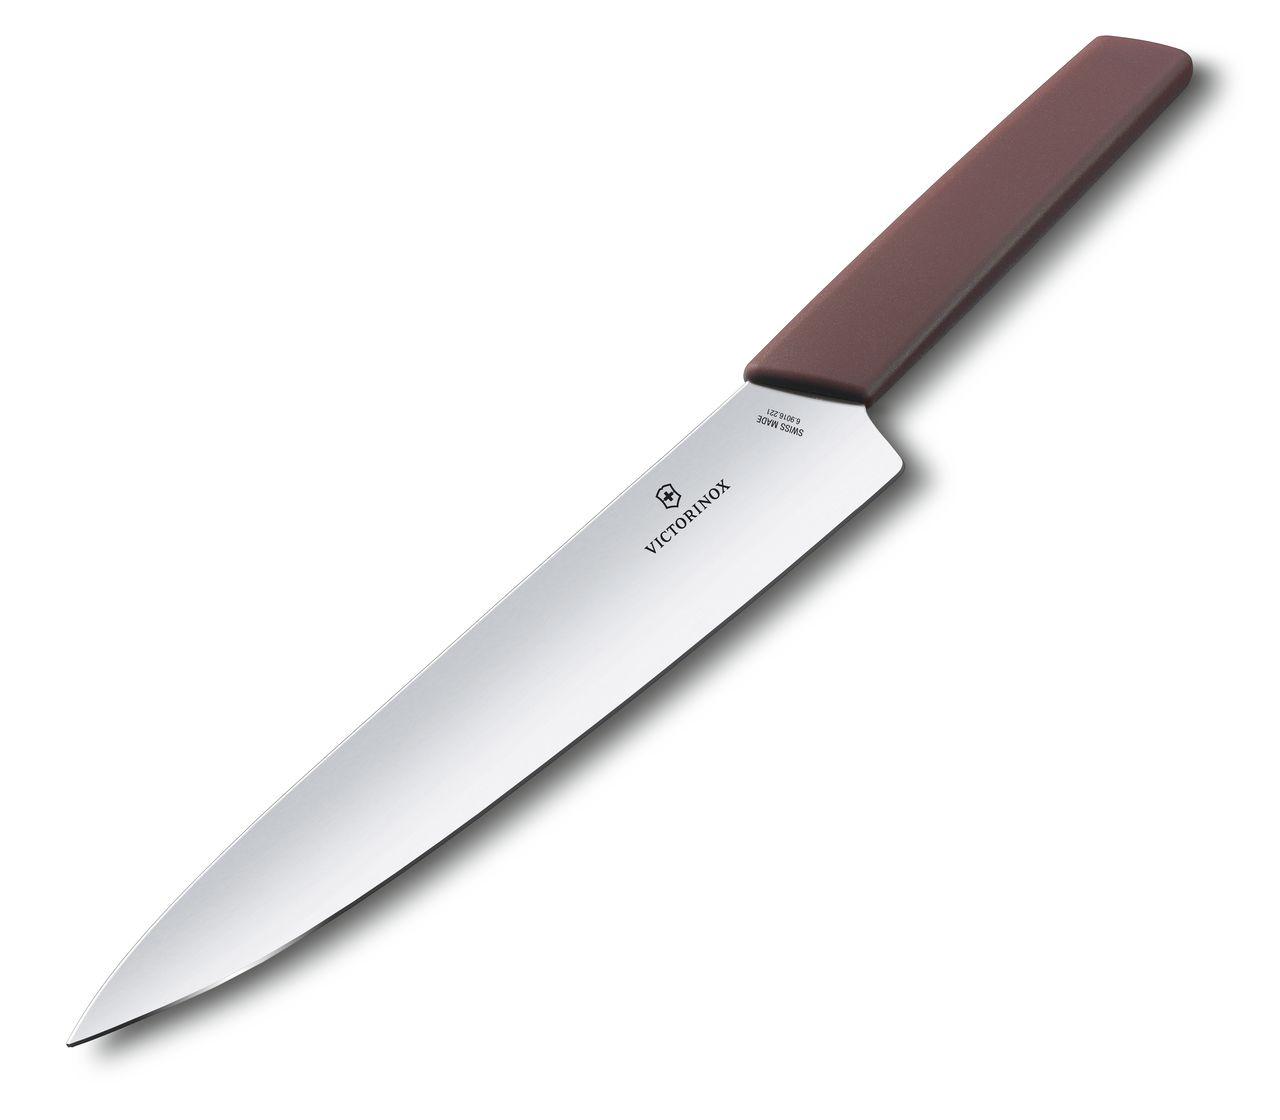 Swiss Modern Chef’s Knife-6.9016.221B